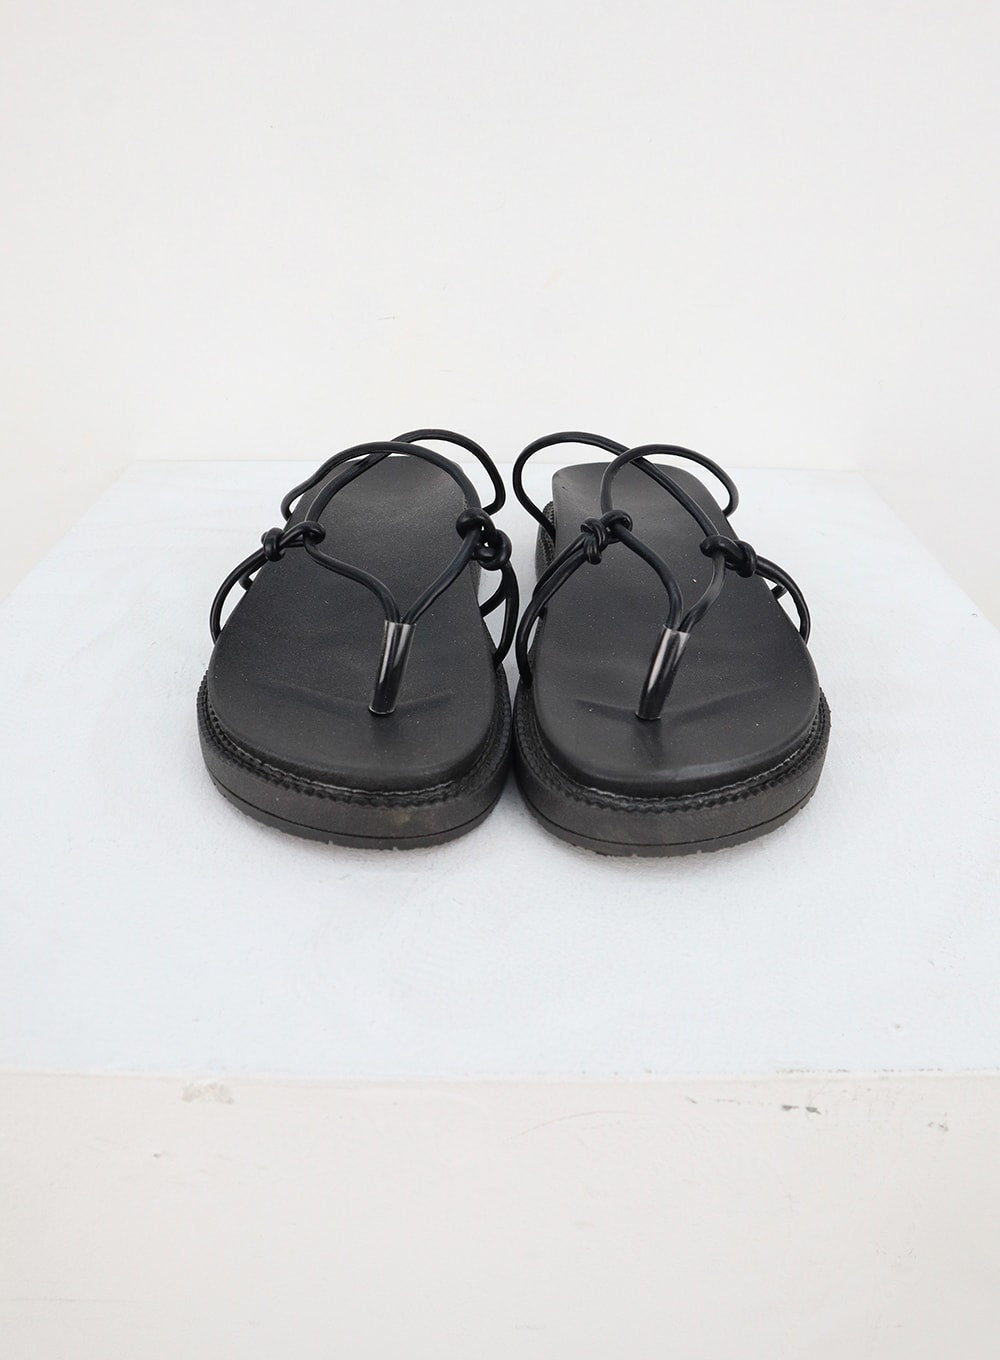 Slide Sandals BY303